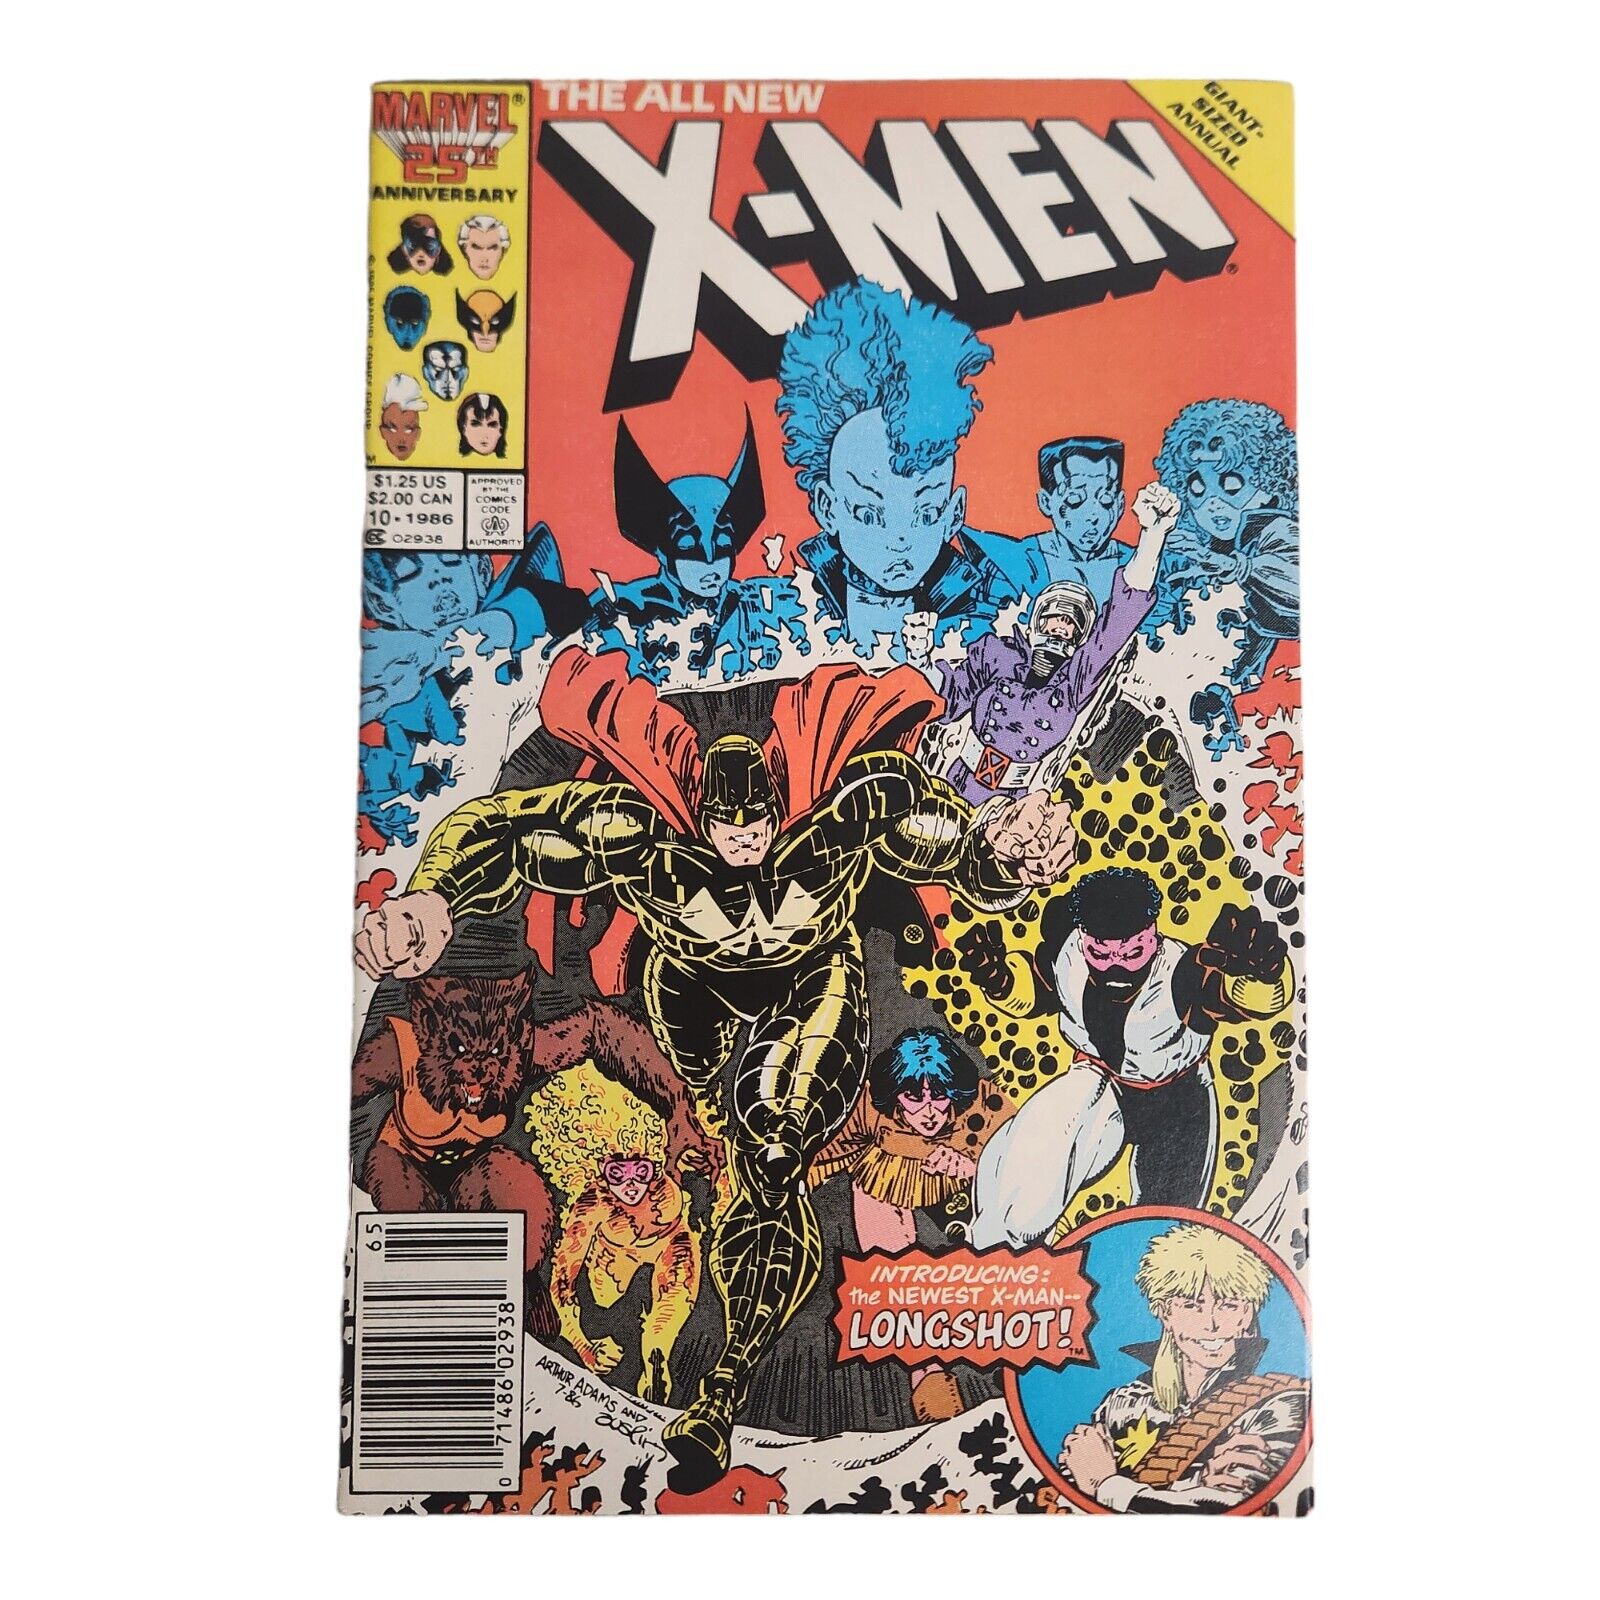 All New X Men Giant-Sized Annual #10 Marvel Comics Longshot Joins Key Newsstand